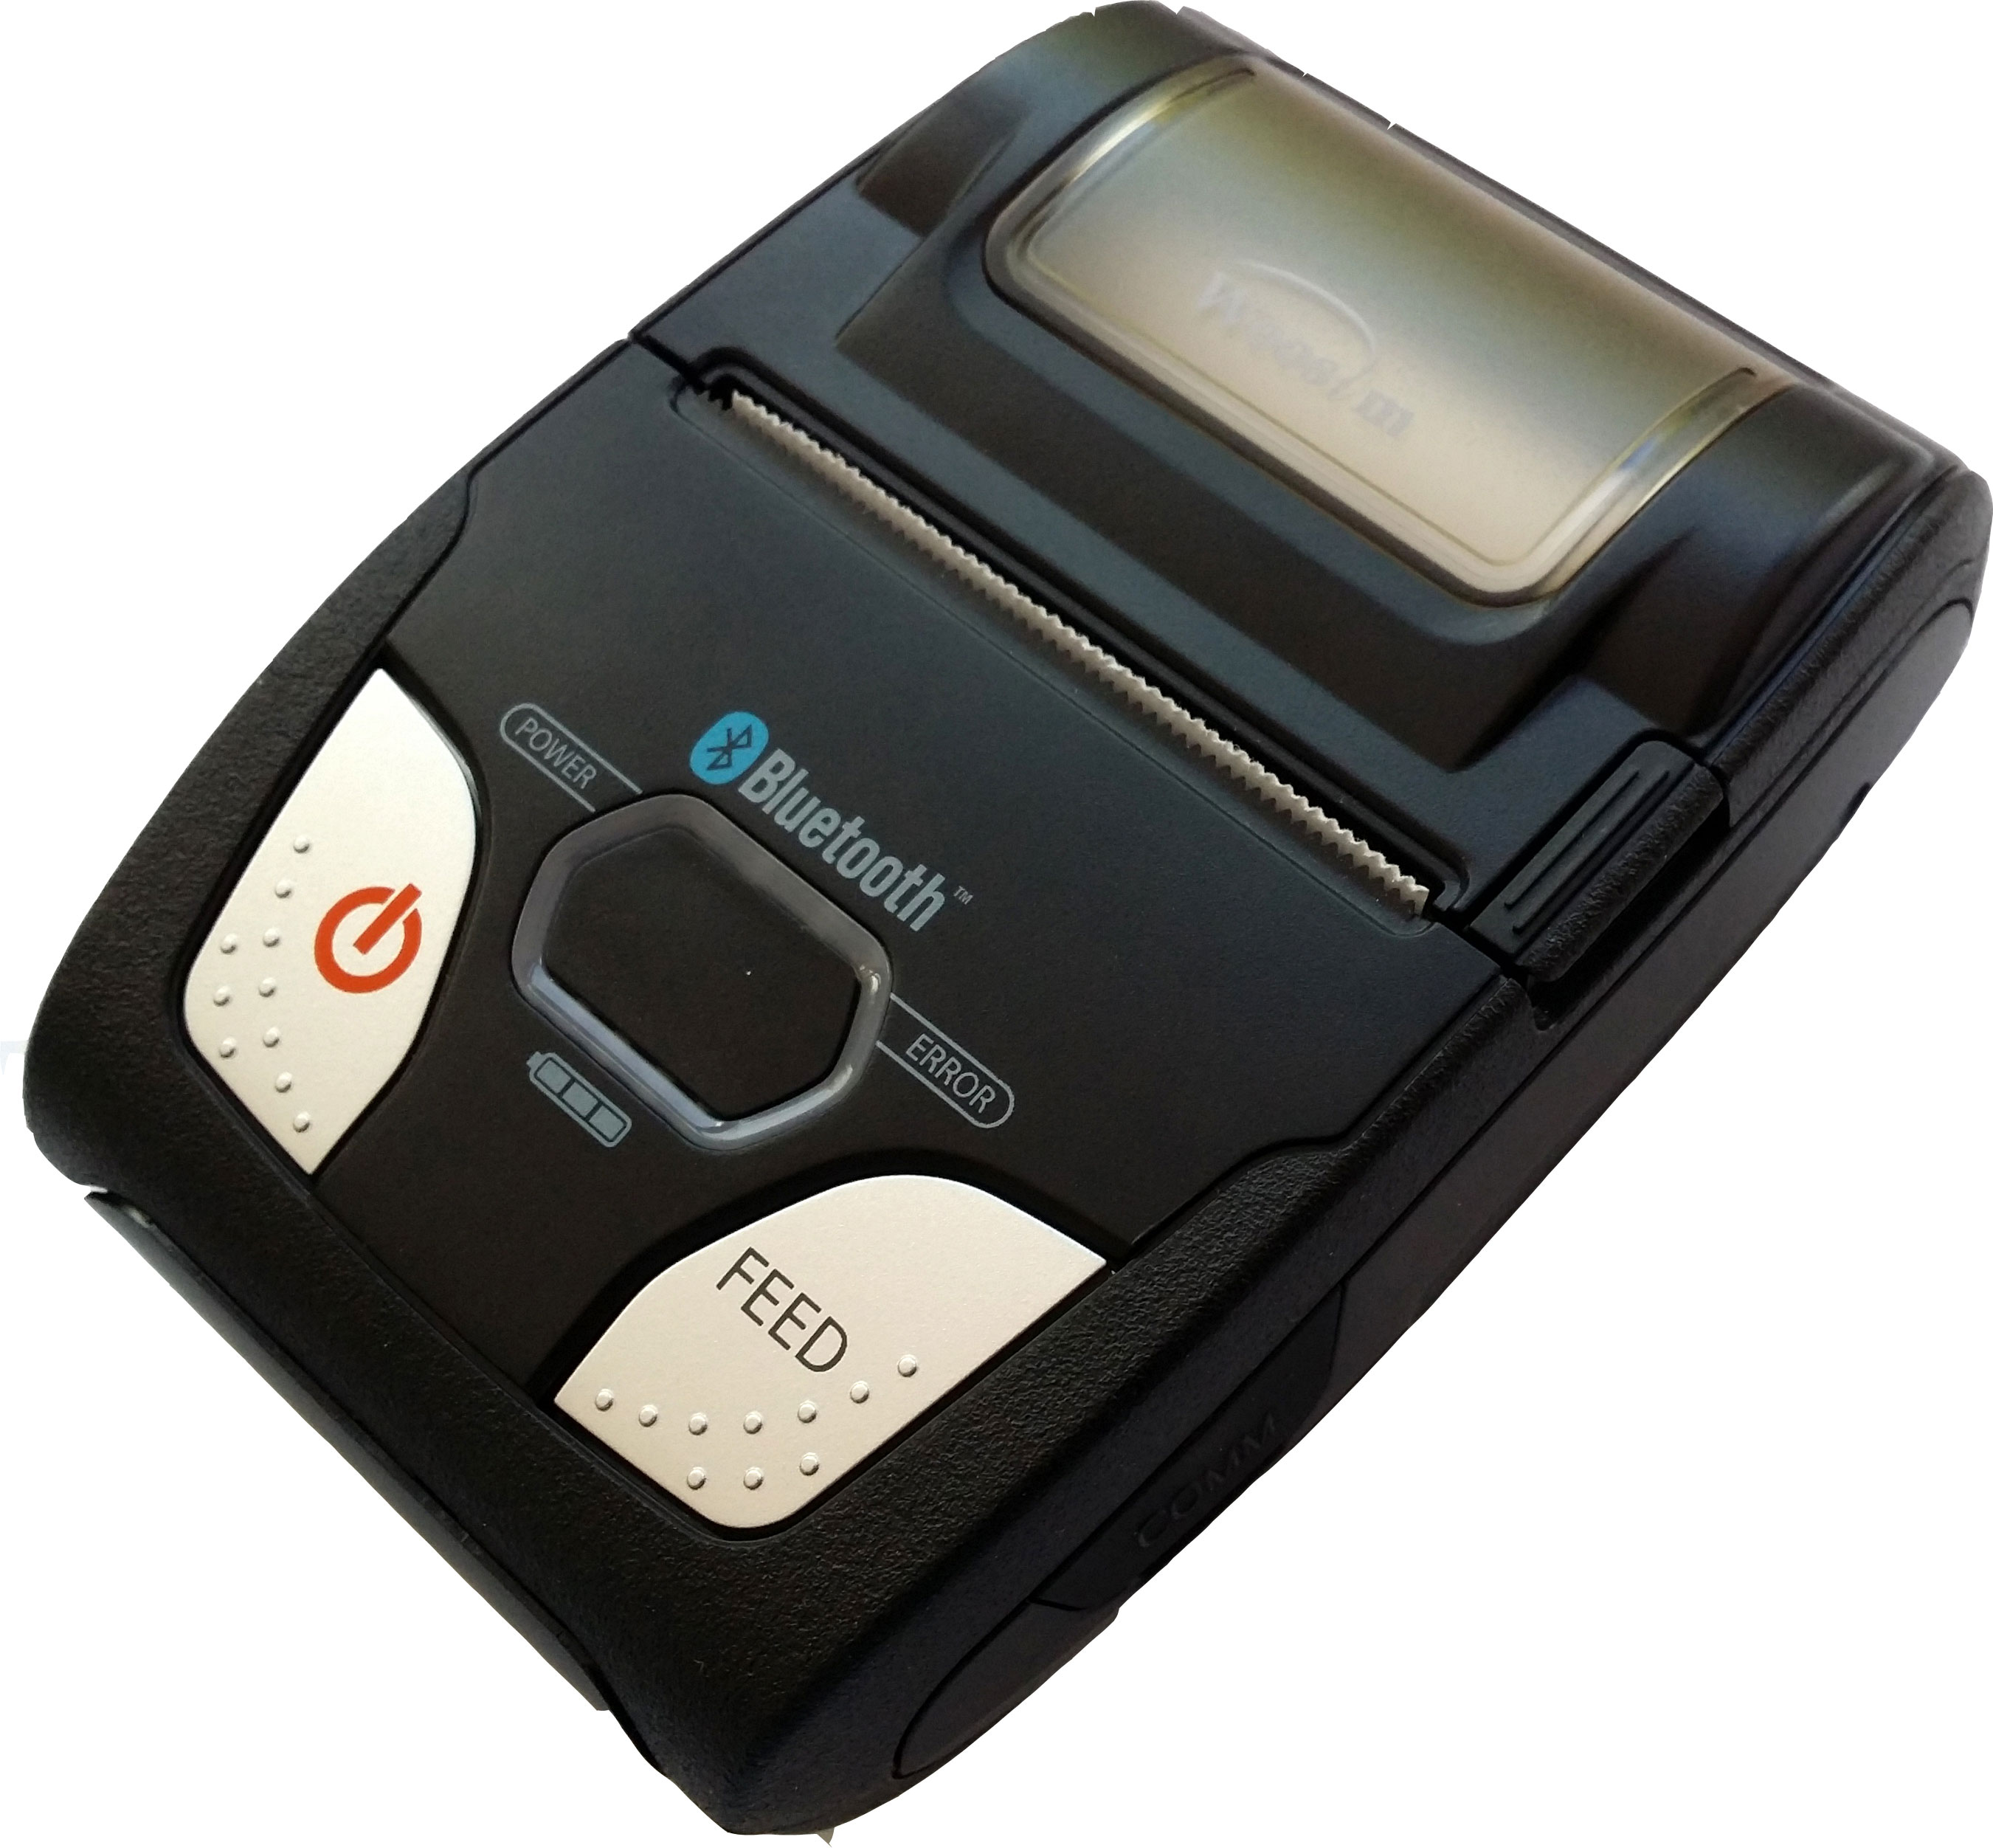 Woosim WSP-R240 printer